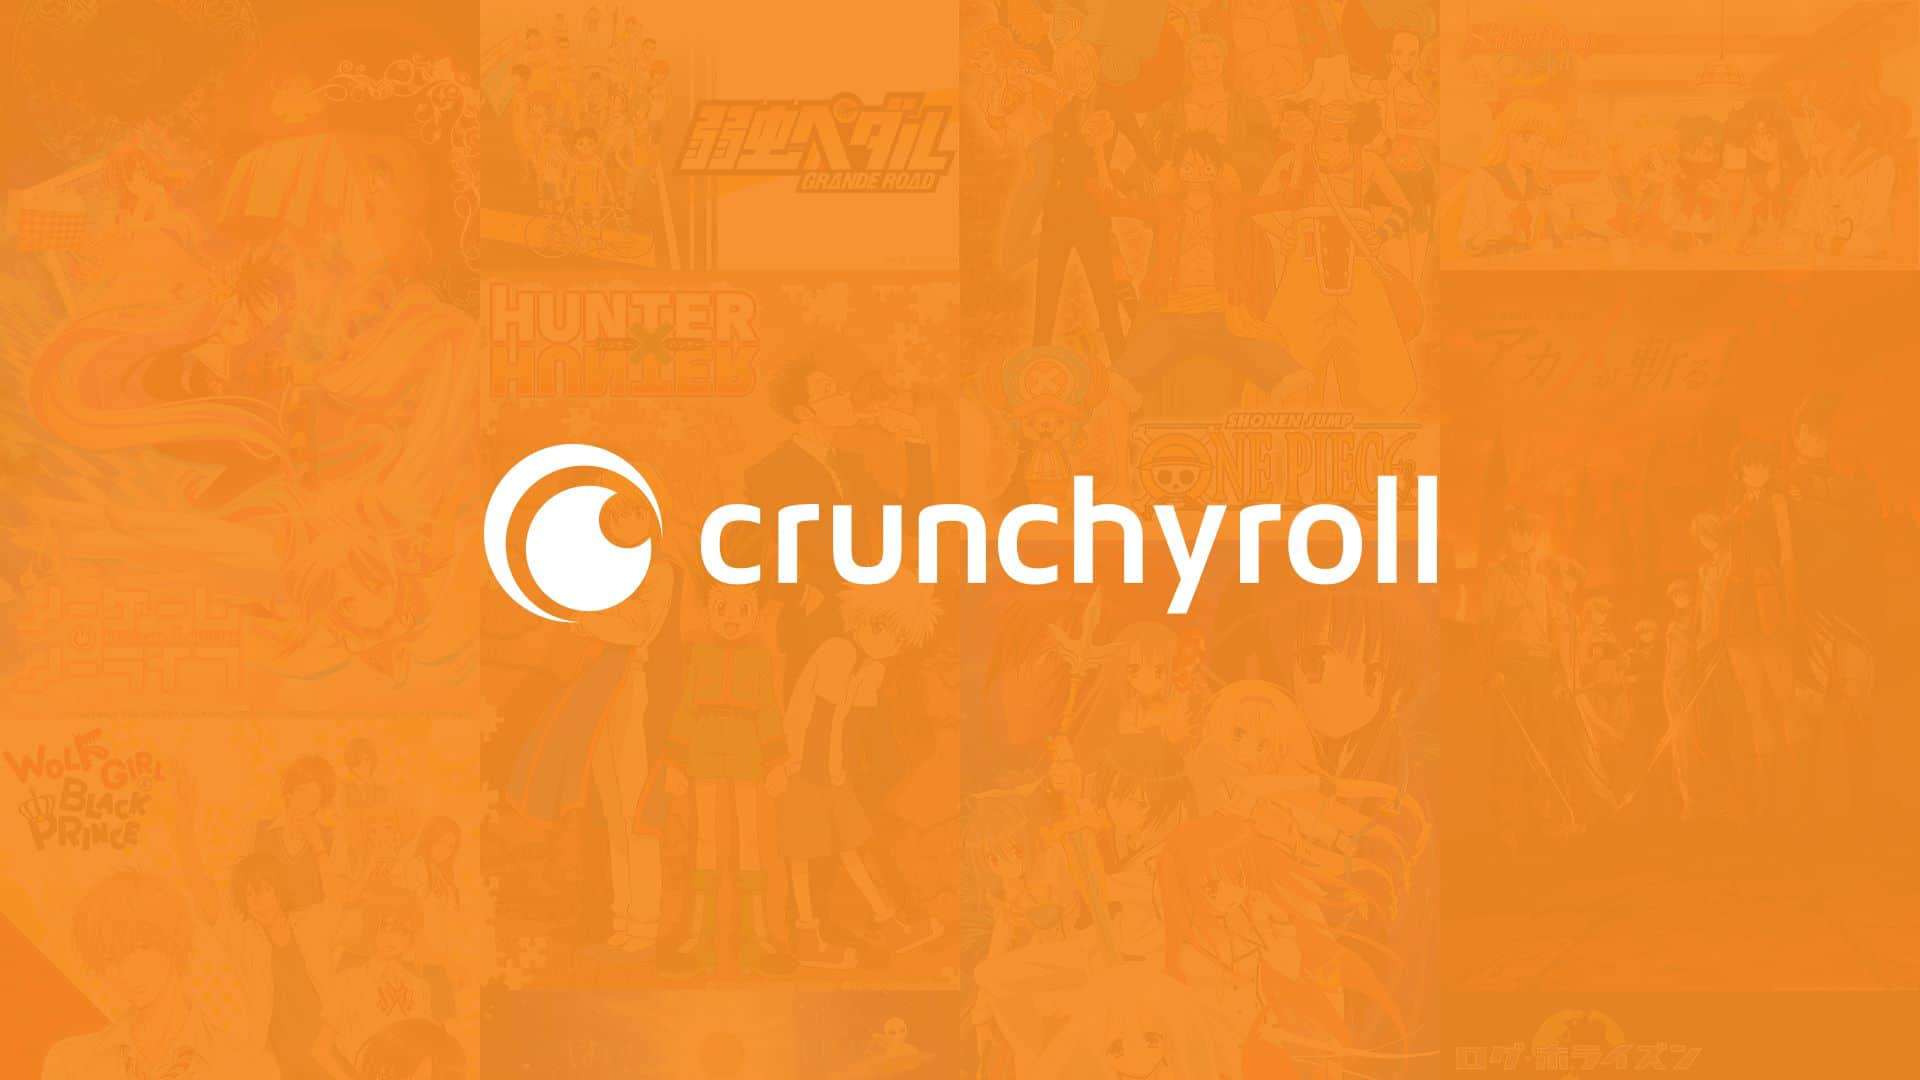 Crunchyroll agora vai ter joguinhos! PATROCINA NÓIS @Crunchyroll Brasi